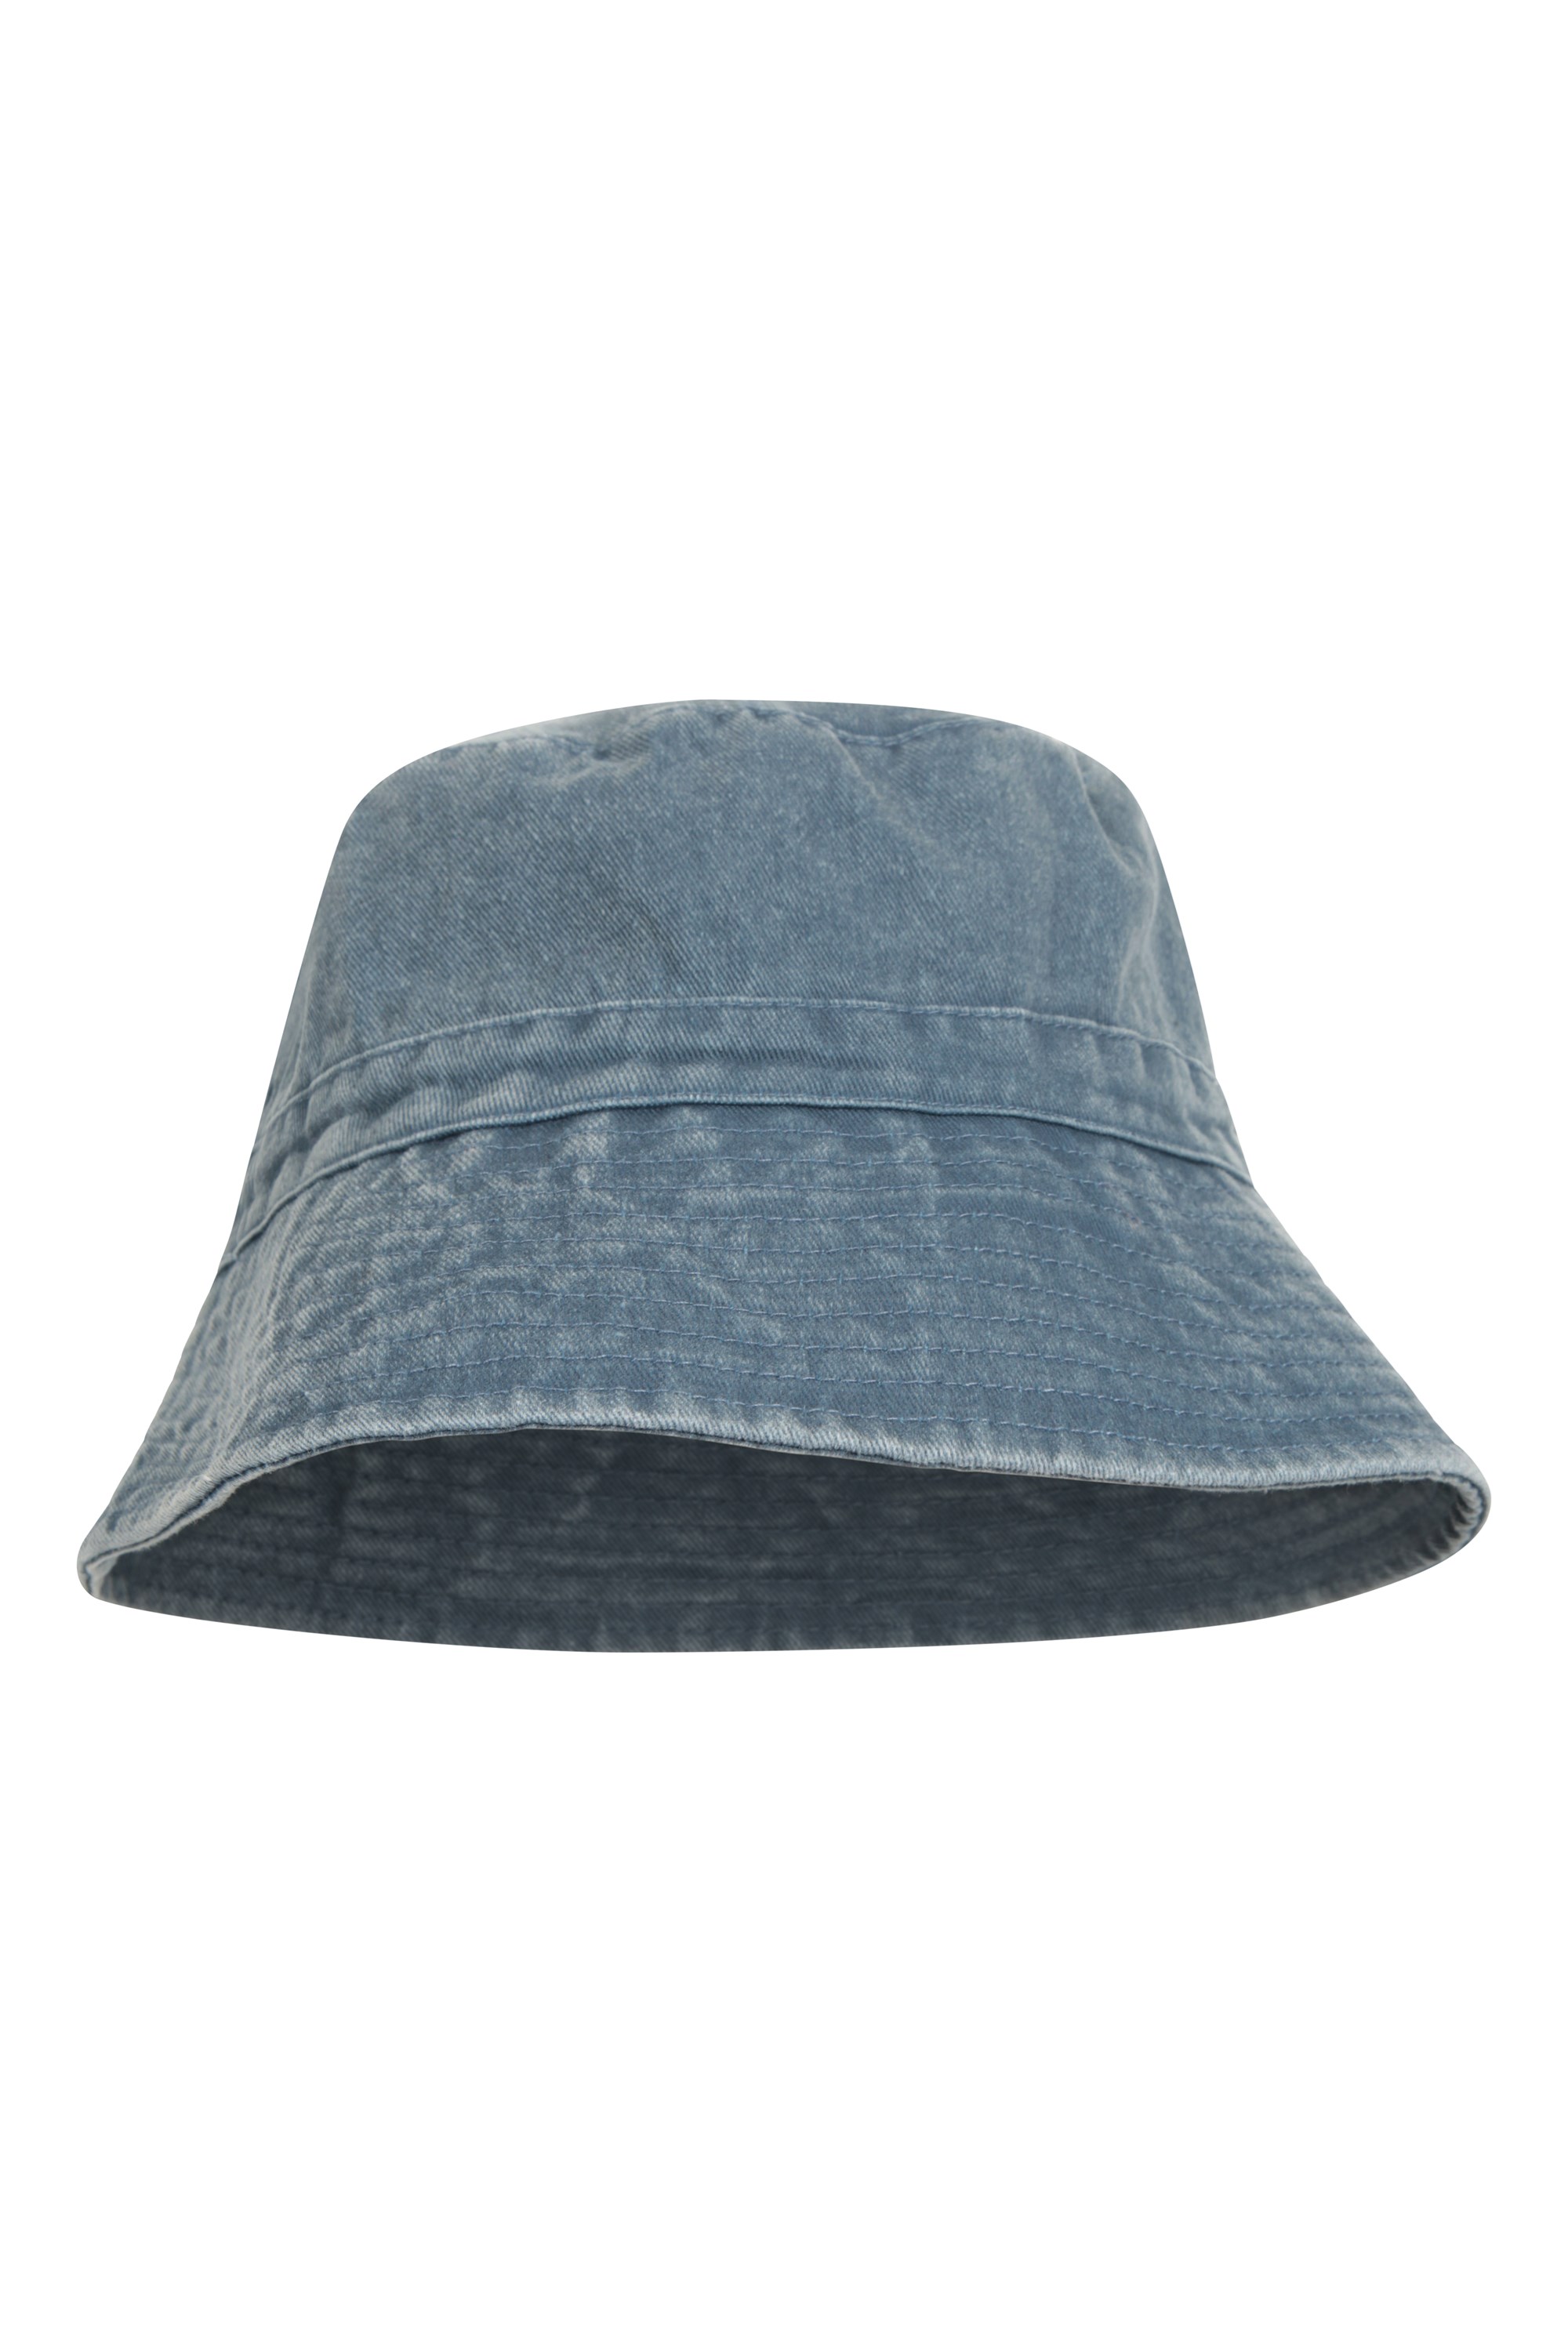 Mountain Warehouse Mens Fisherman Bucket Hat - Green | Size ONE